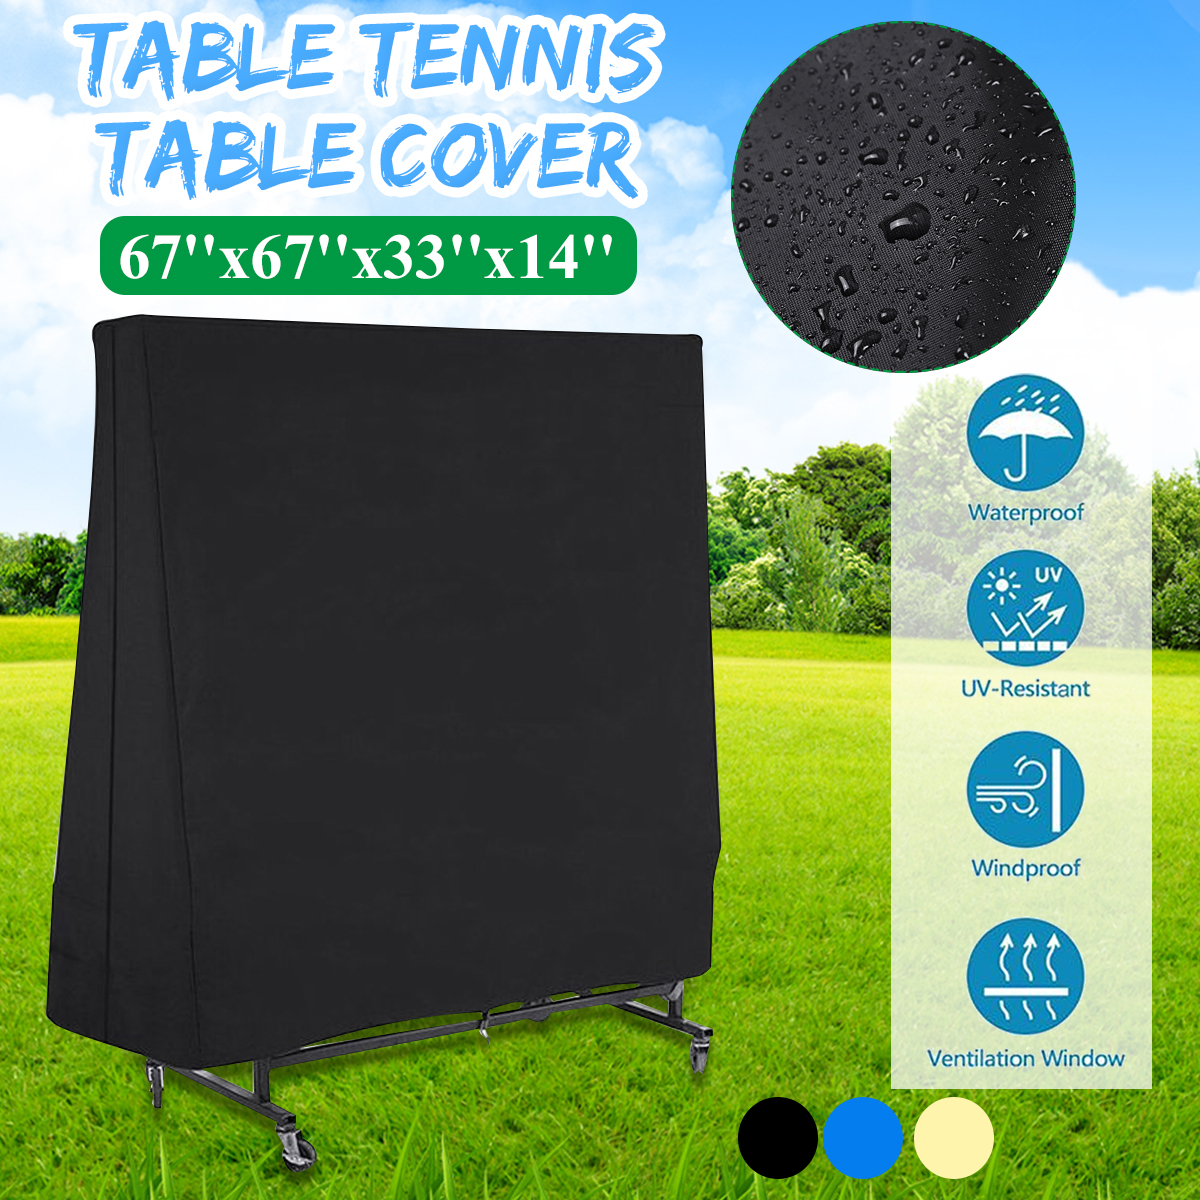 67x67x33x14-Waterproof-Dustproof-Table-Tennis-Table-Cover-1734954-1